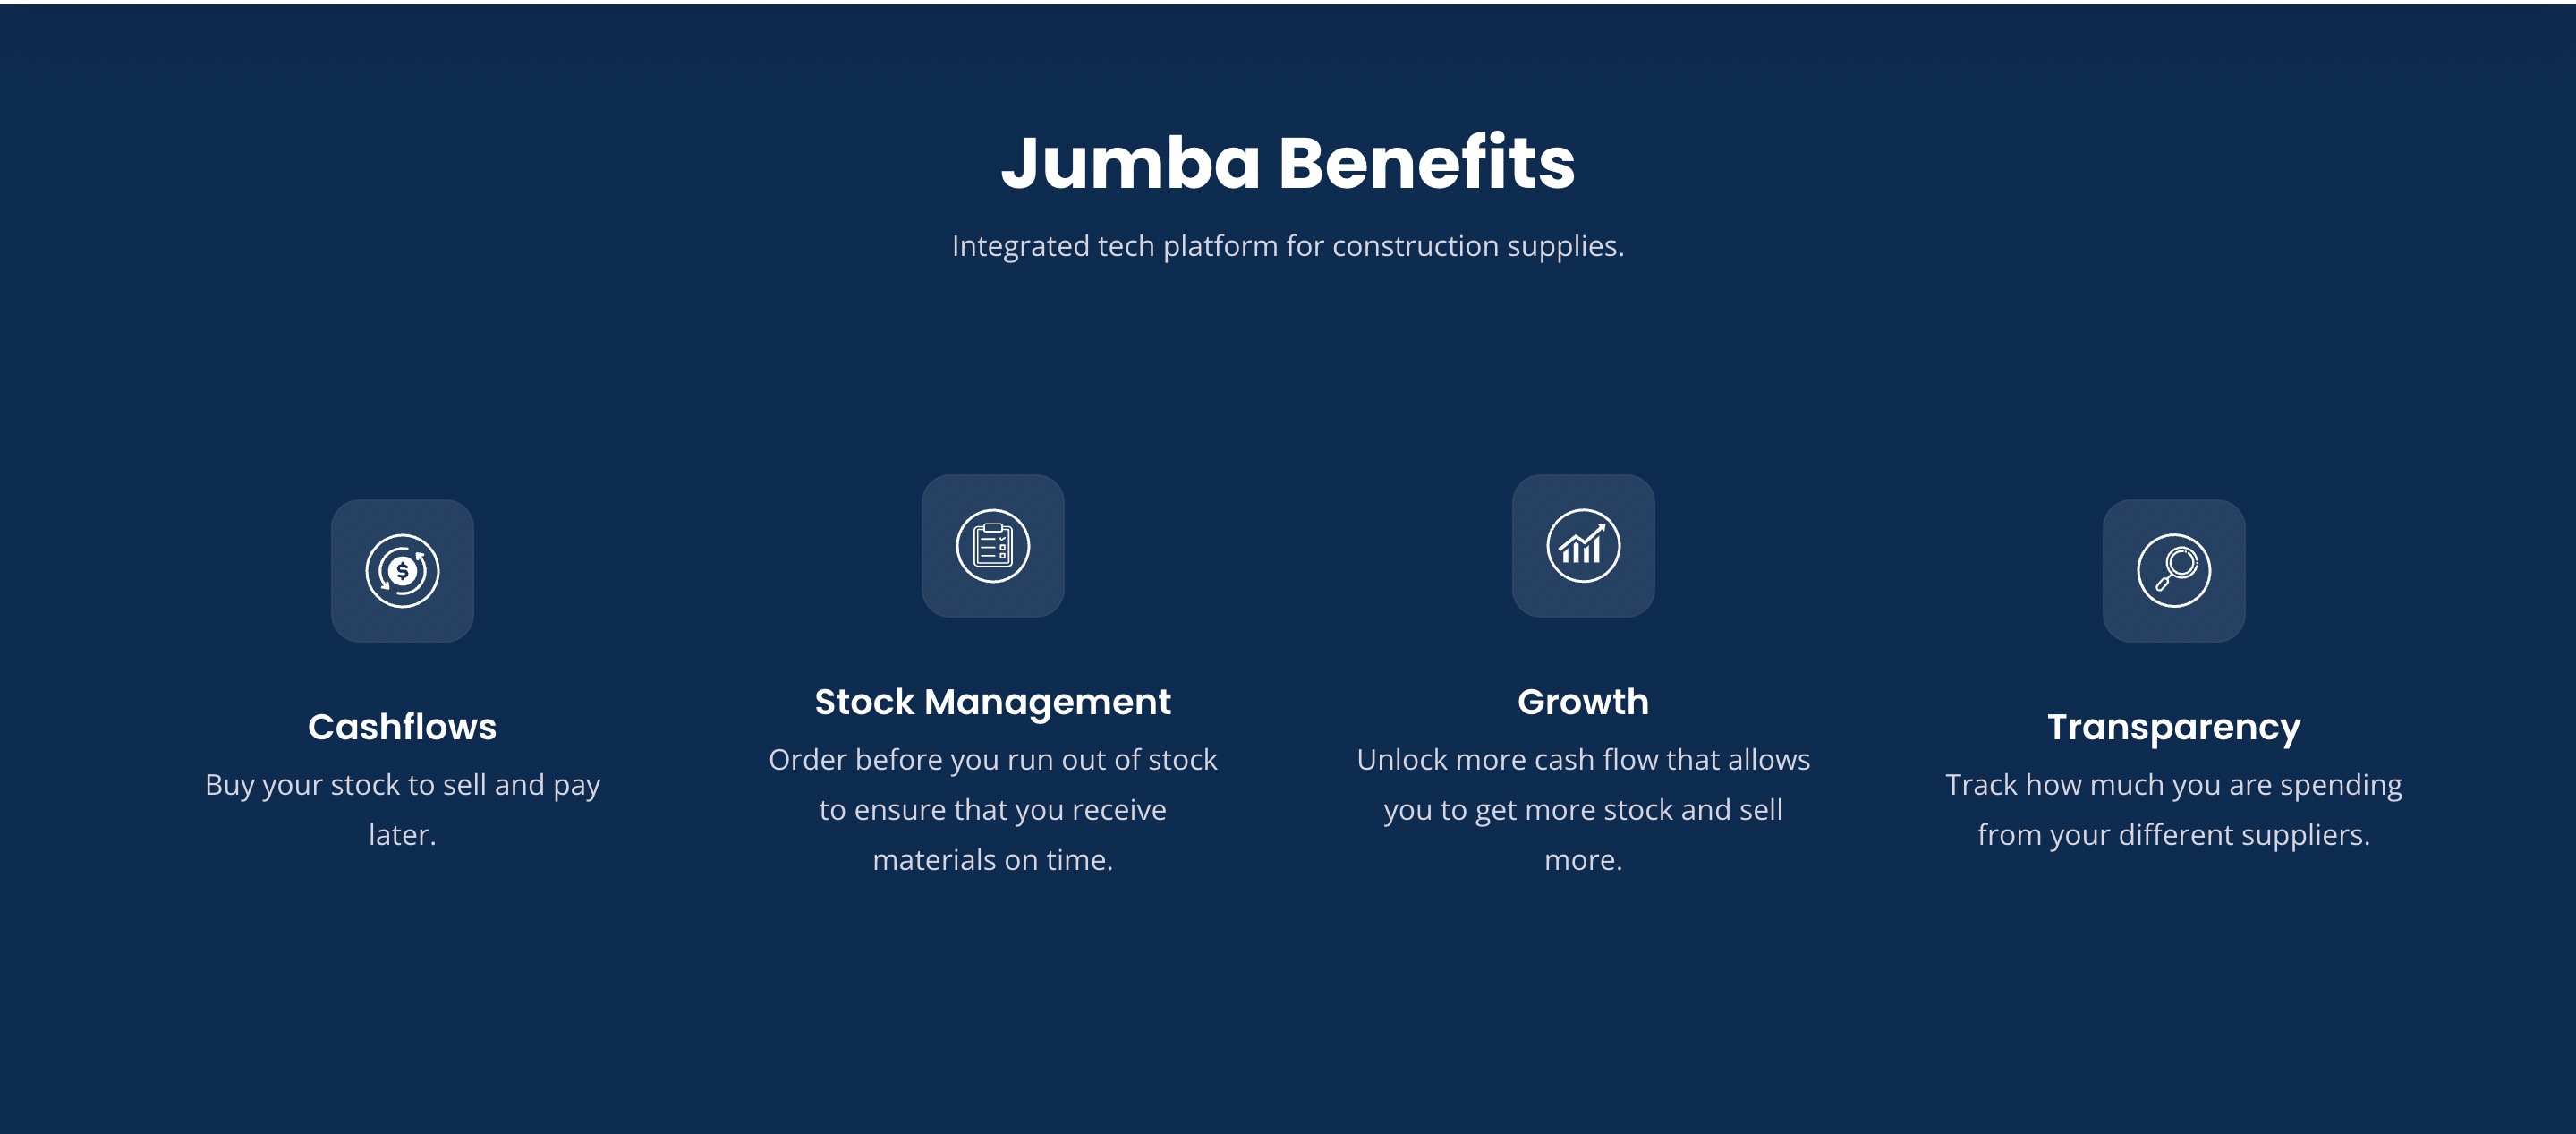 Jumba 已经筹集了 100 万美元的种子前资金